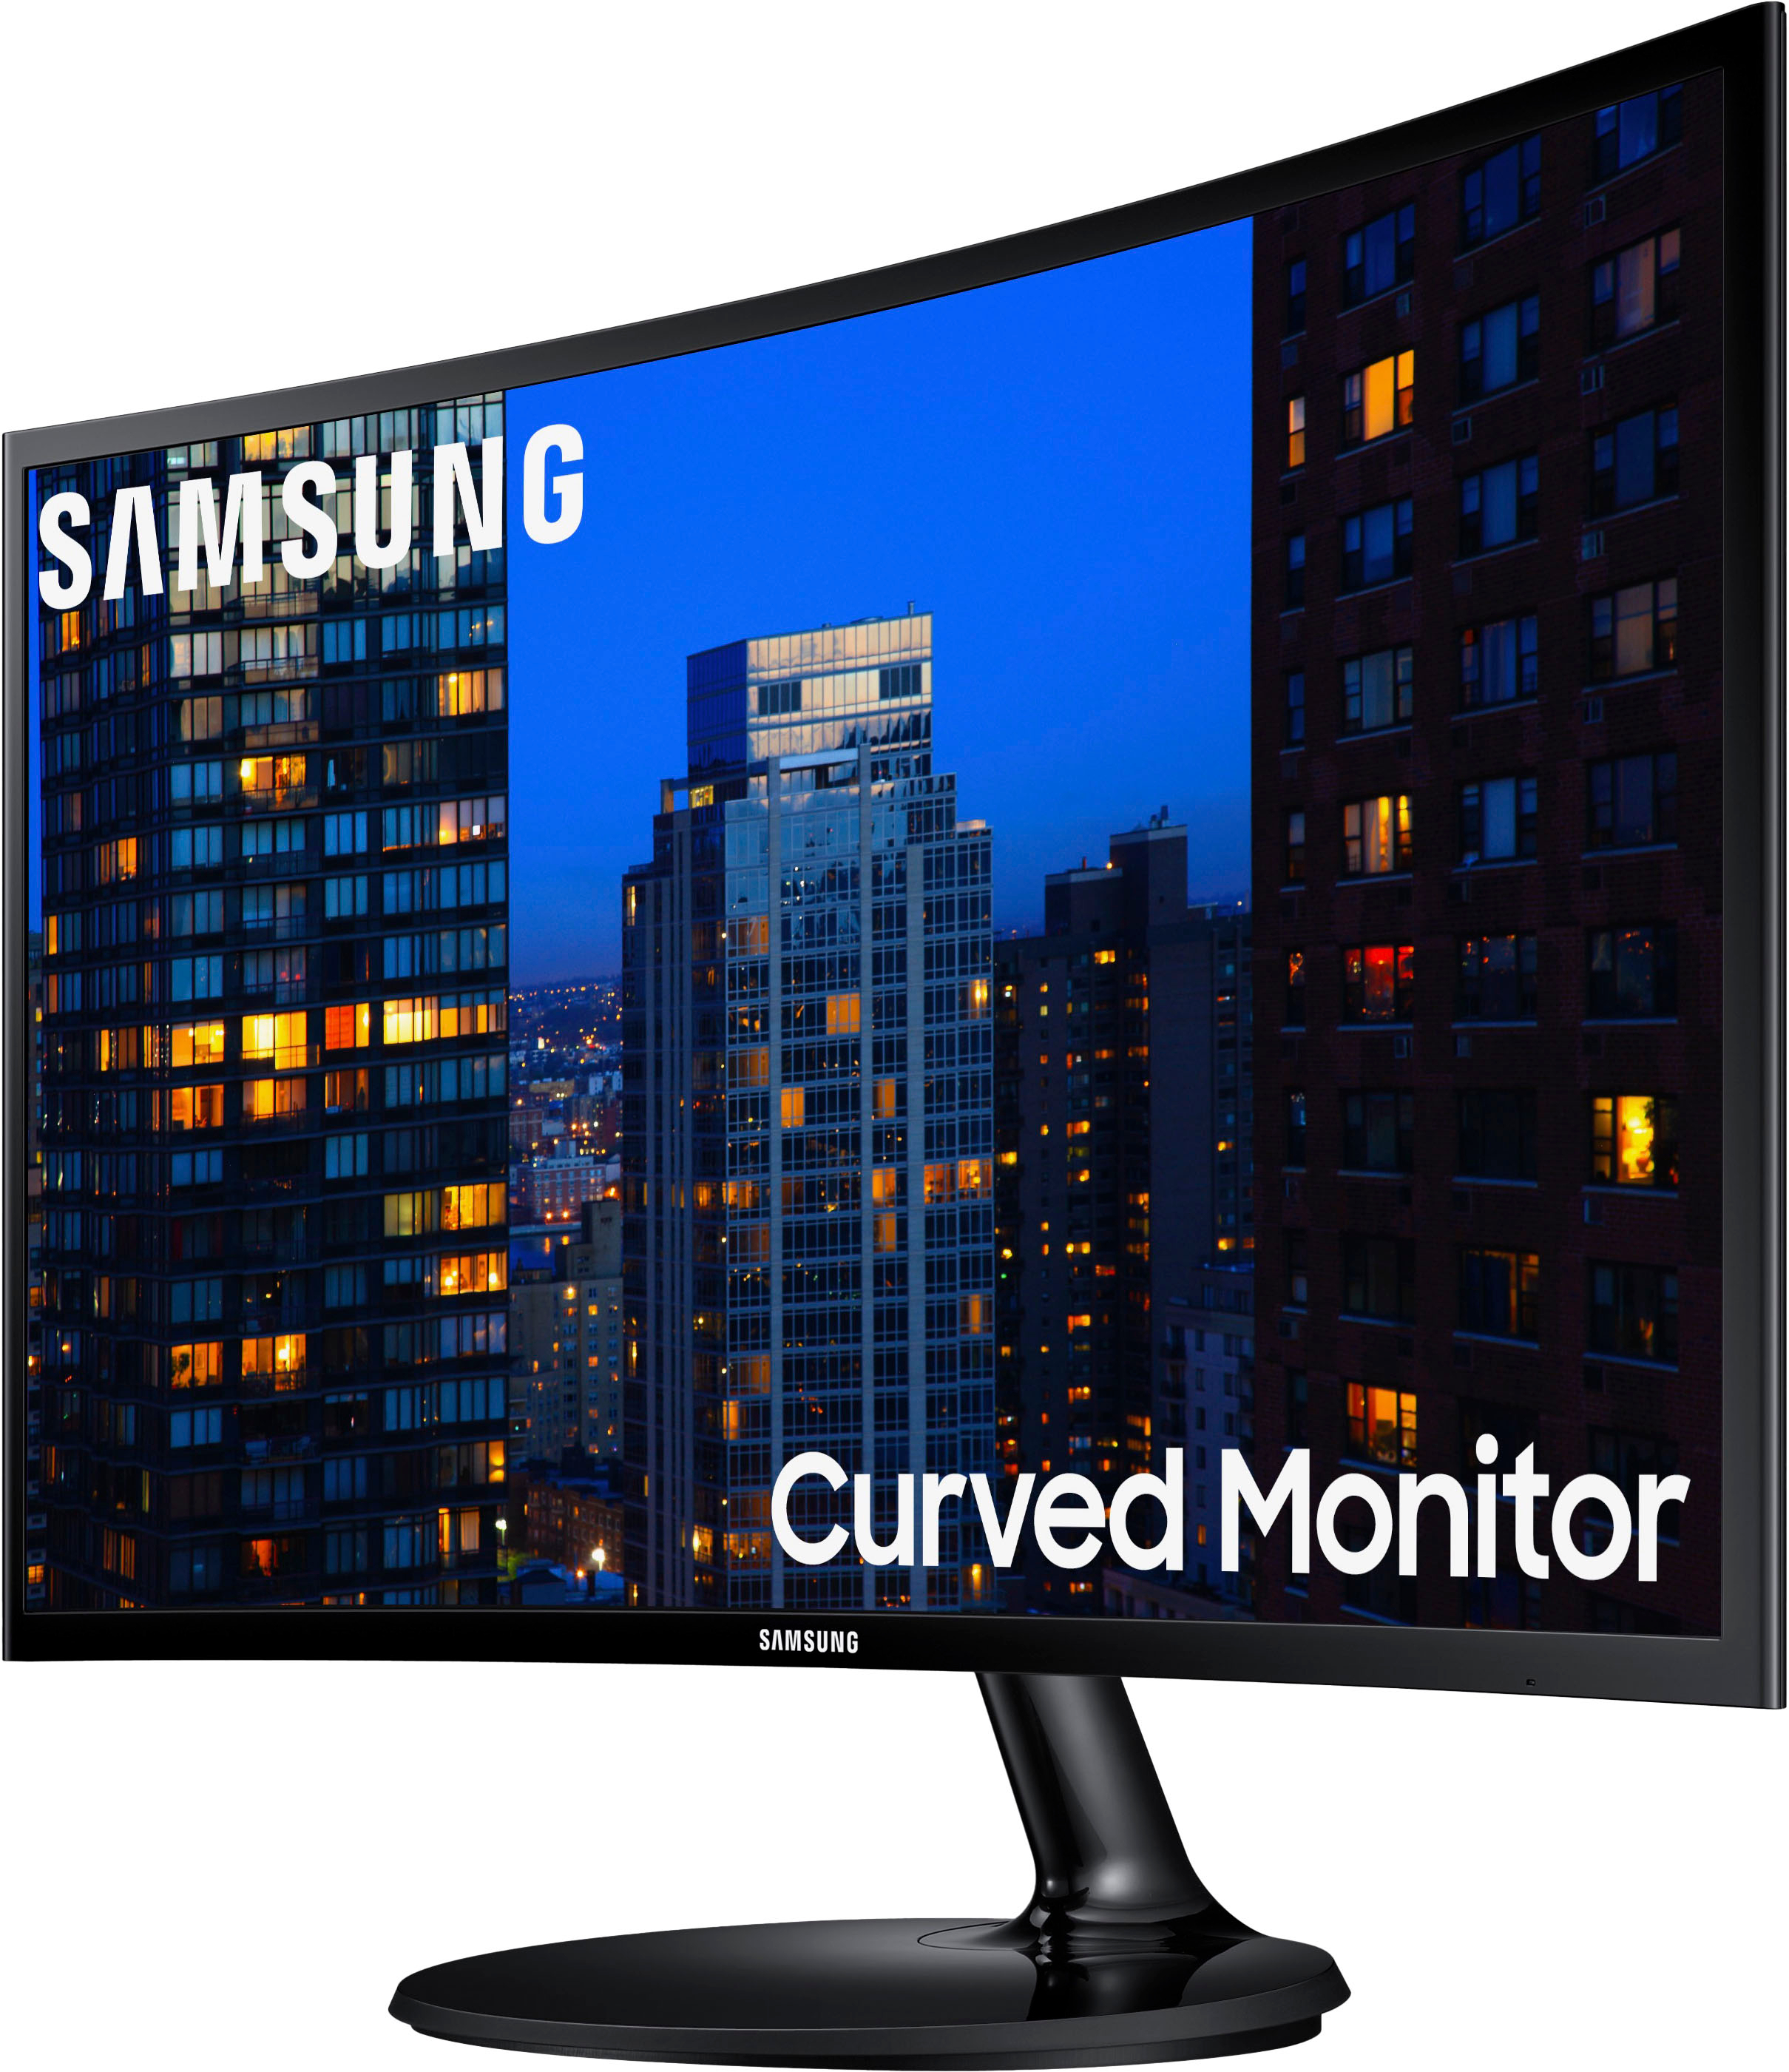 sladre Blive opmærksom Manga Samsung 390C Series 24" LED Curved FHD AMD FreeSync Monitor (HDMI, VGA)  Black C24F390 - Best Buy